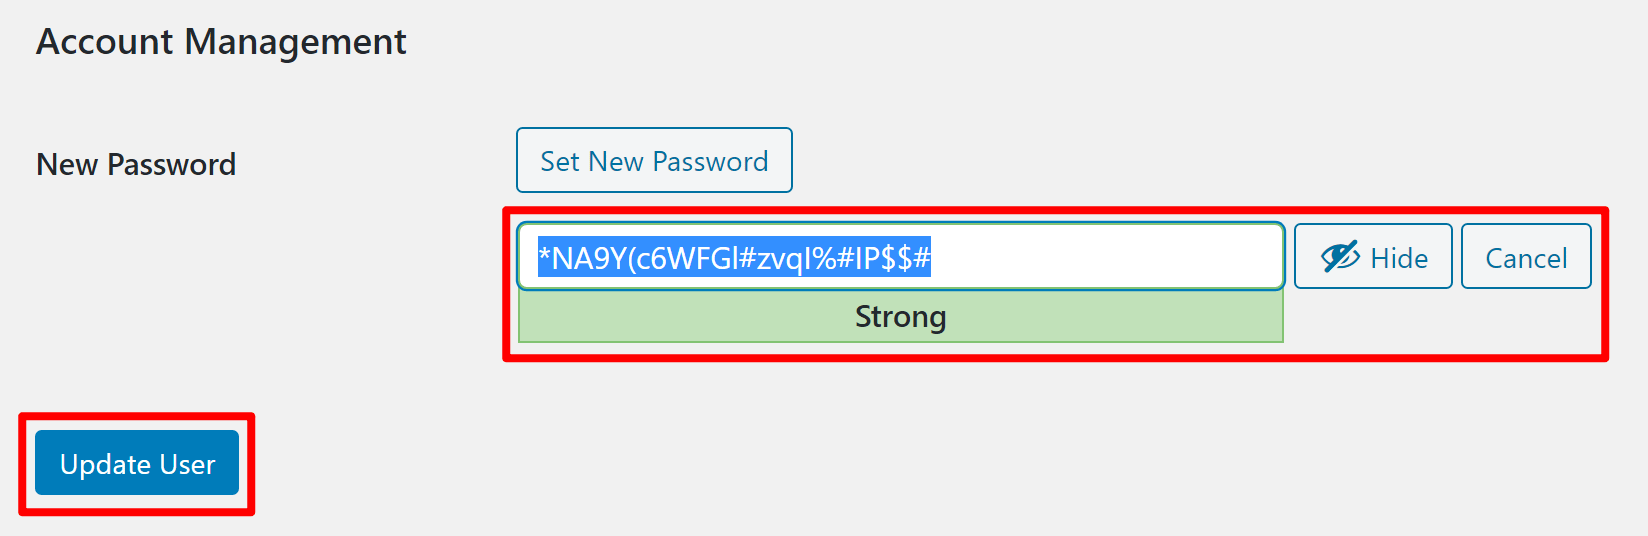 Enter the new password